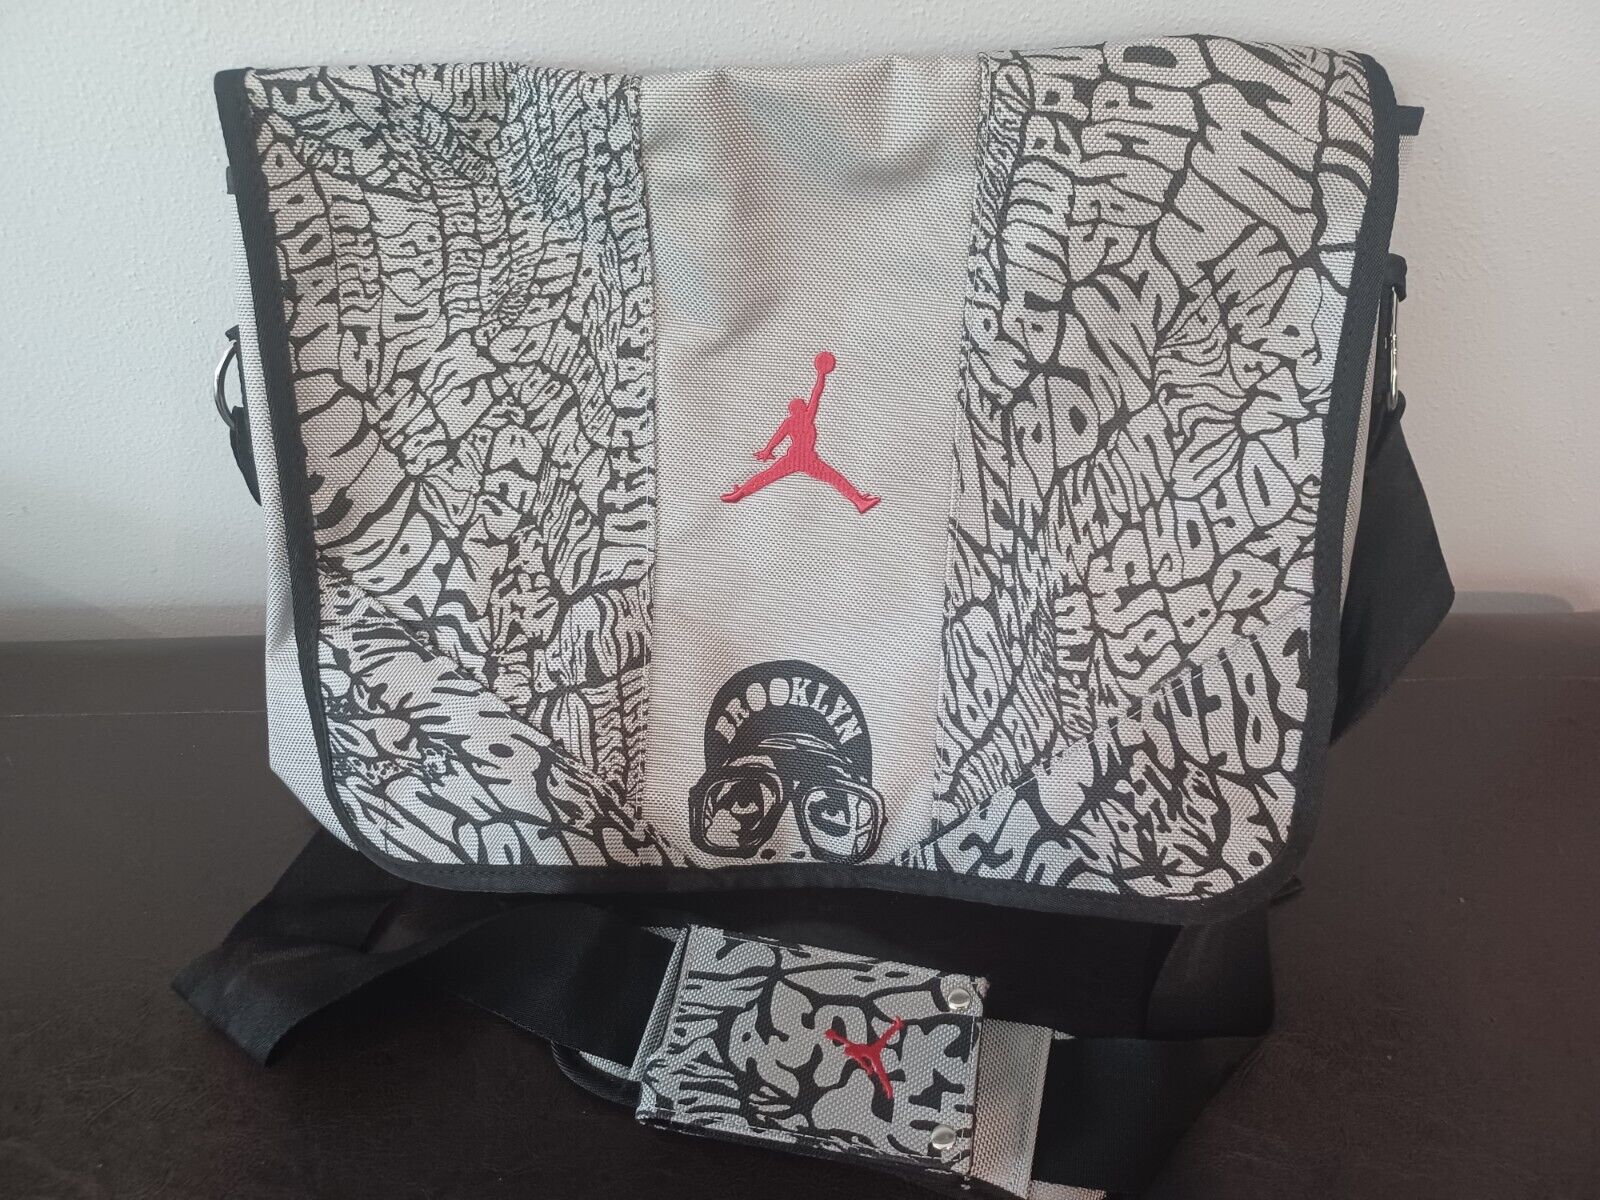 Nike Air Jordan 2006 Laptop Messenger Bag - Mars Blackmon Elephant Print 